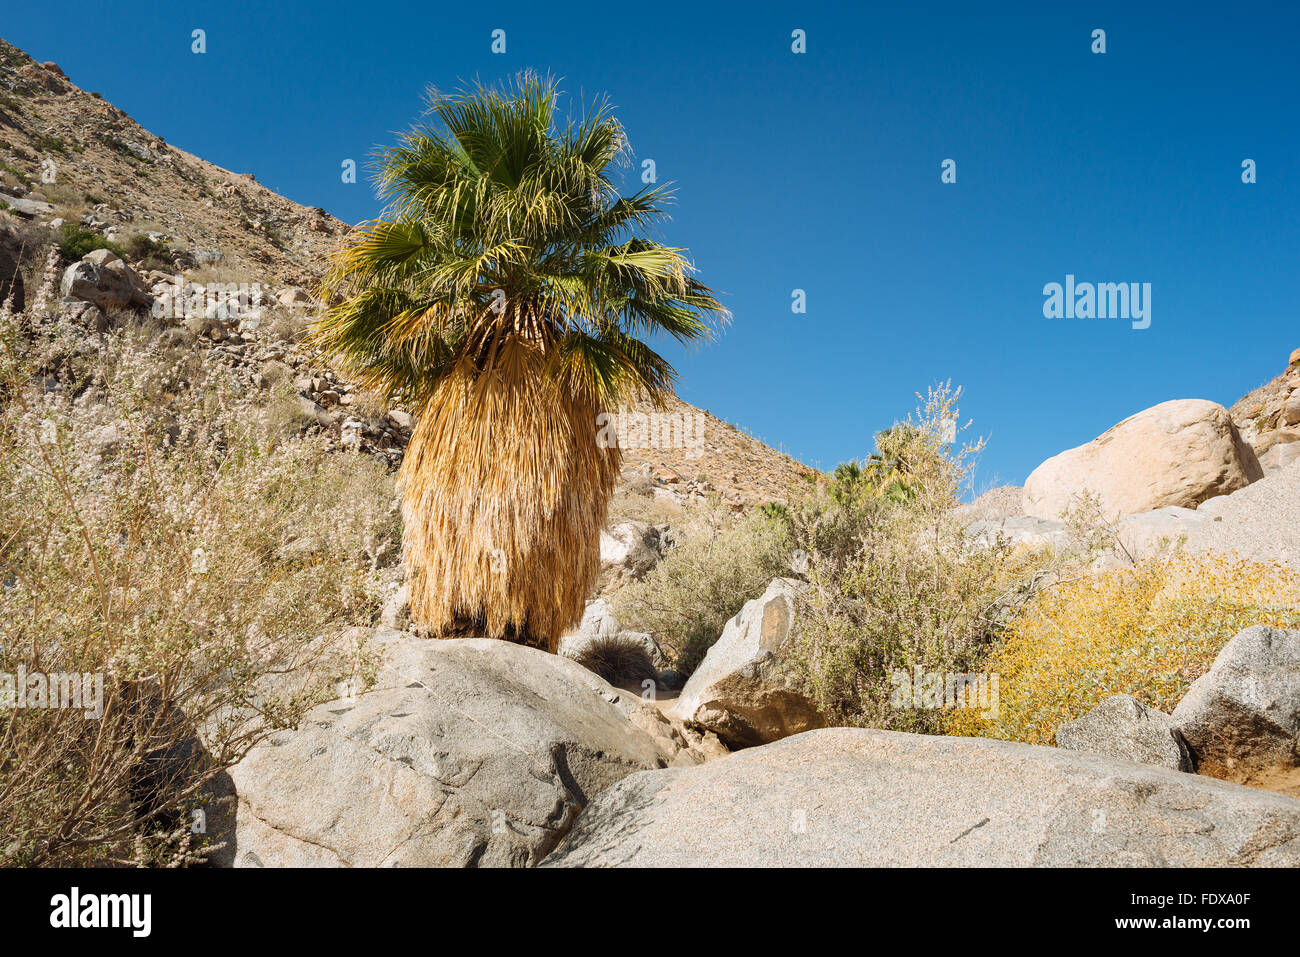 A california fan palm (washingtonia filifera) in Hellhole Canyon, Anza-Borrego Desert State Park, California Stock Photo